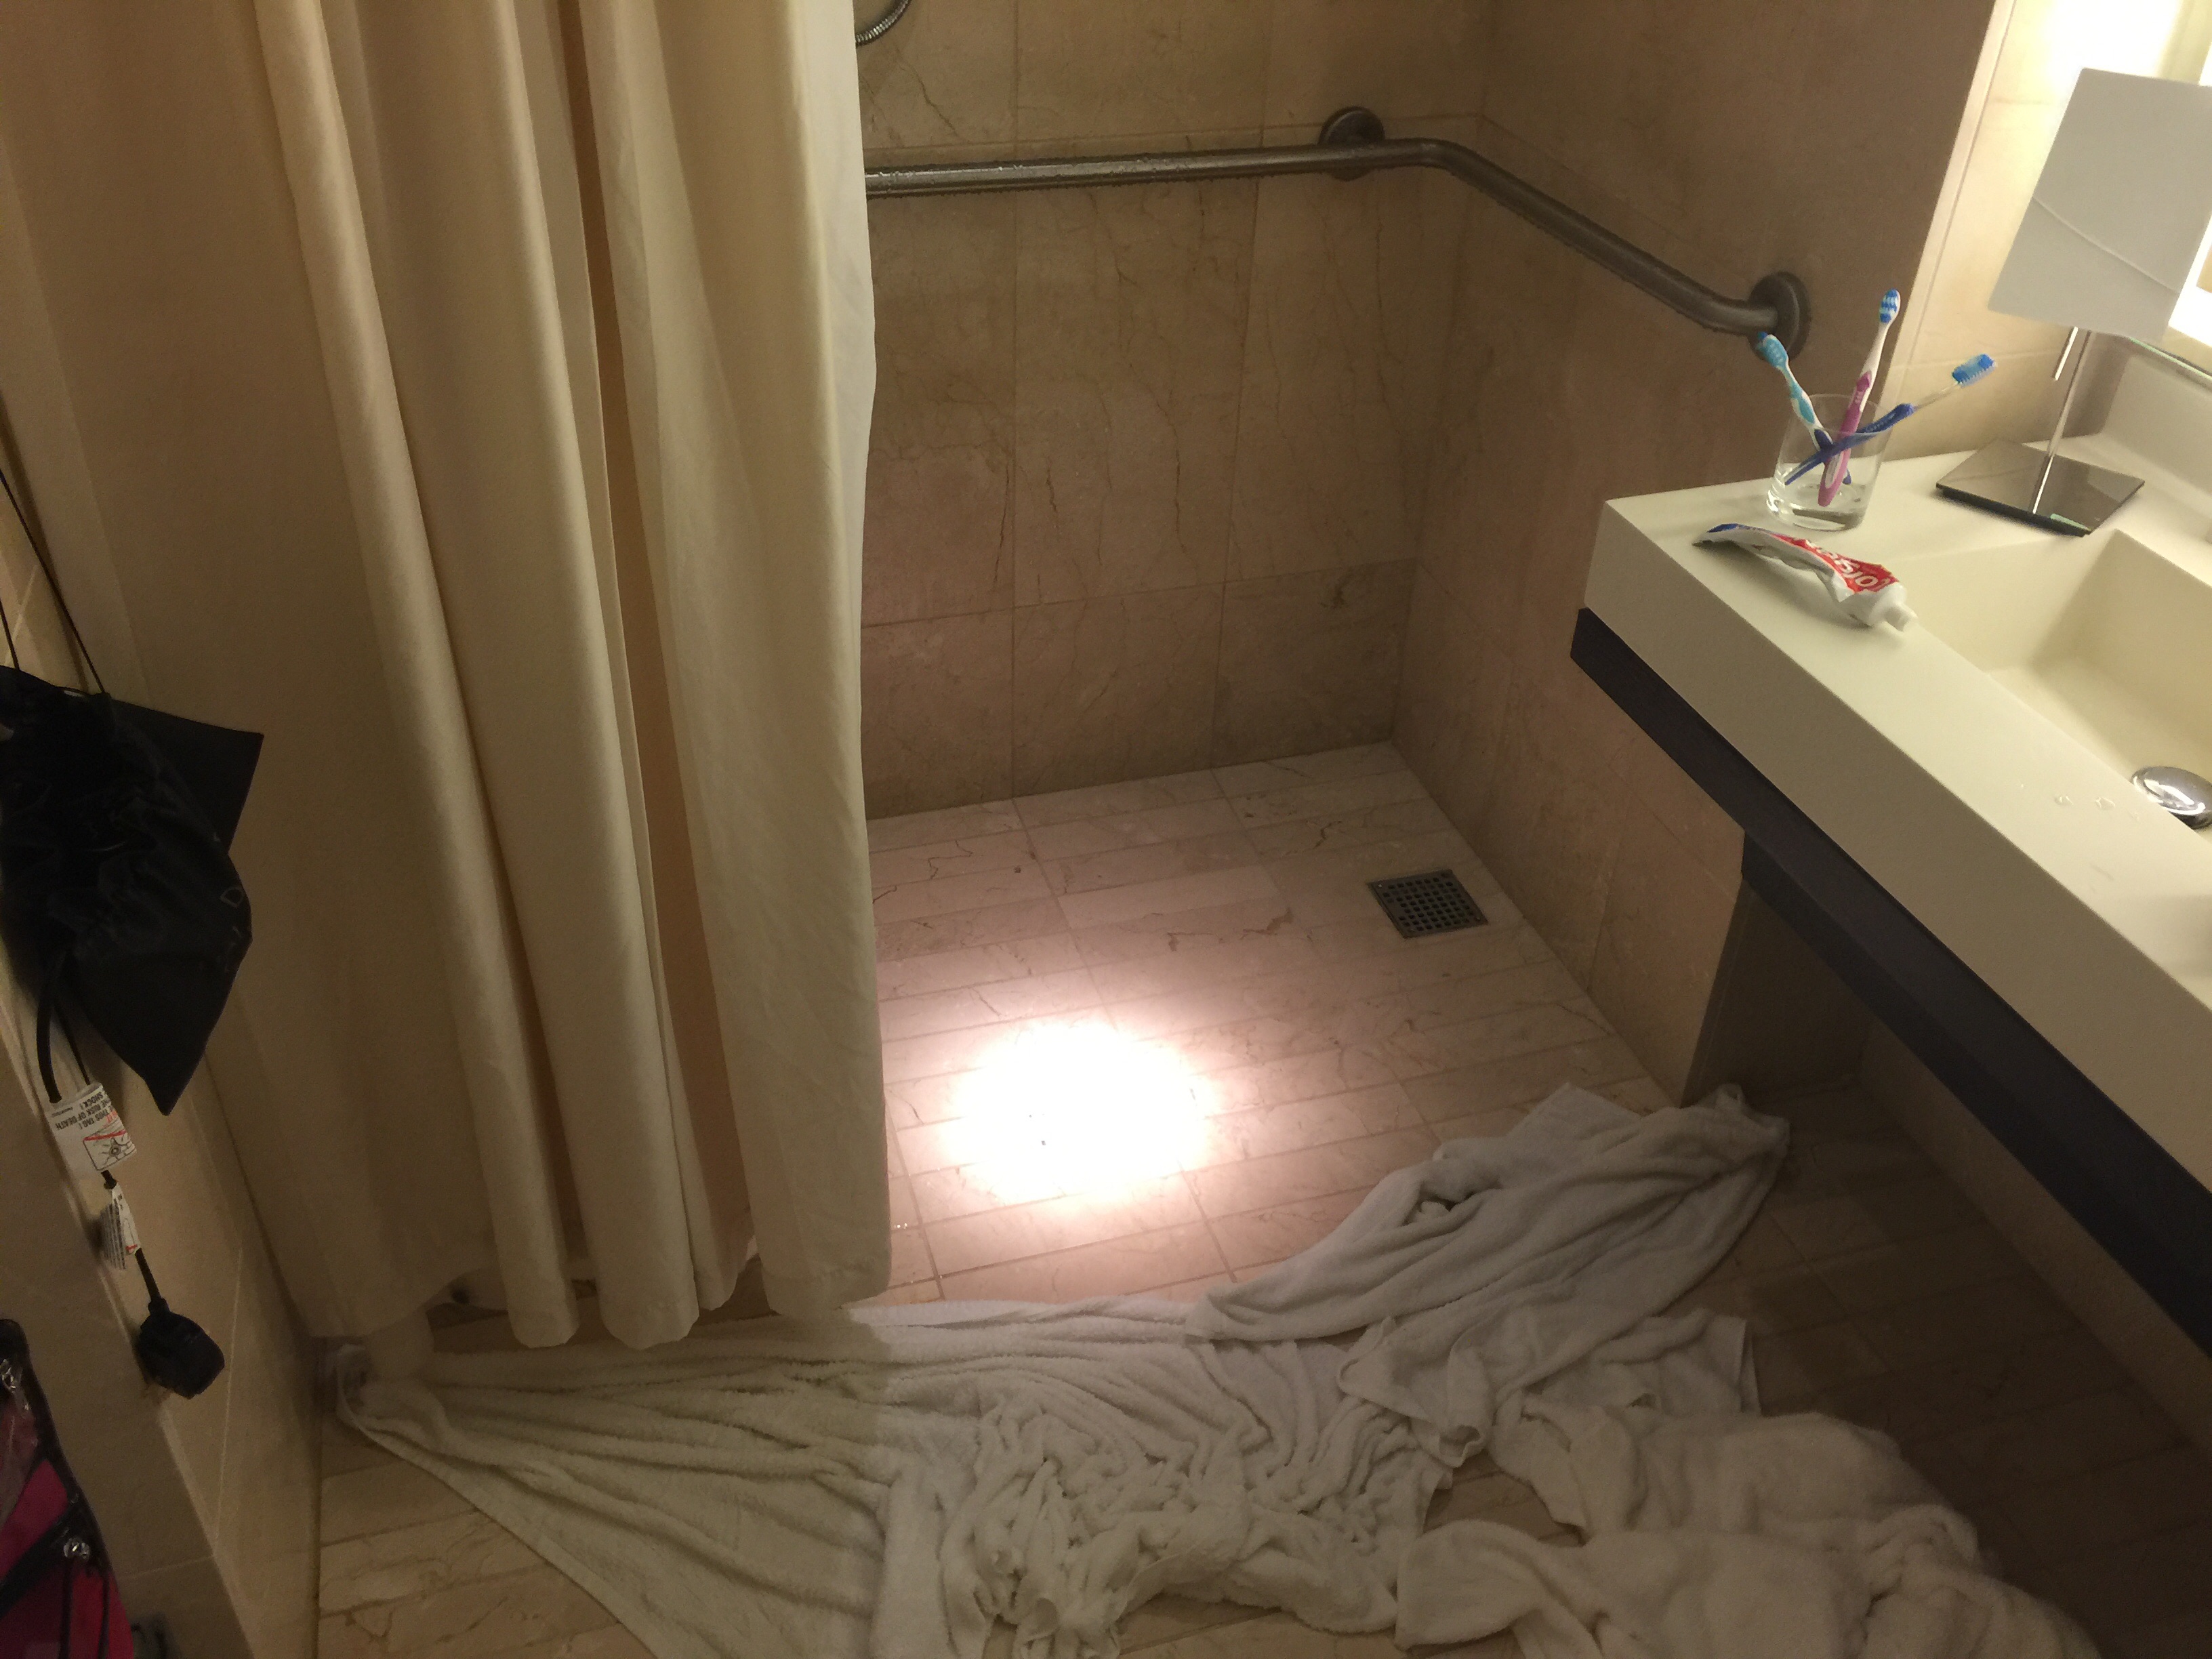 five star hotel secrets - shower flooding